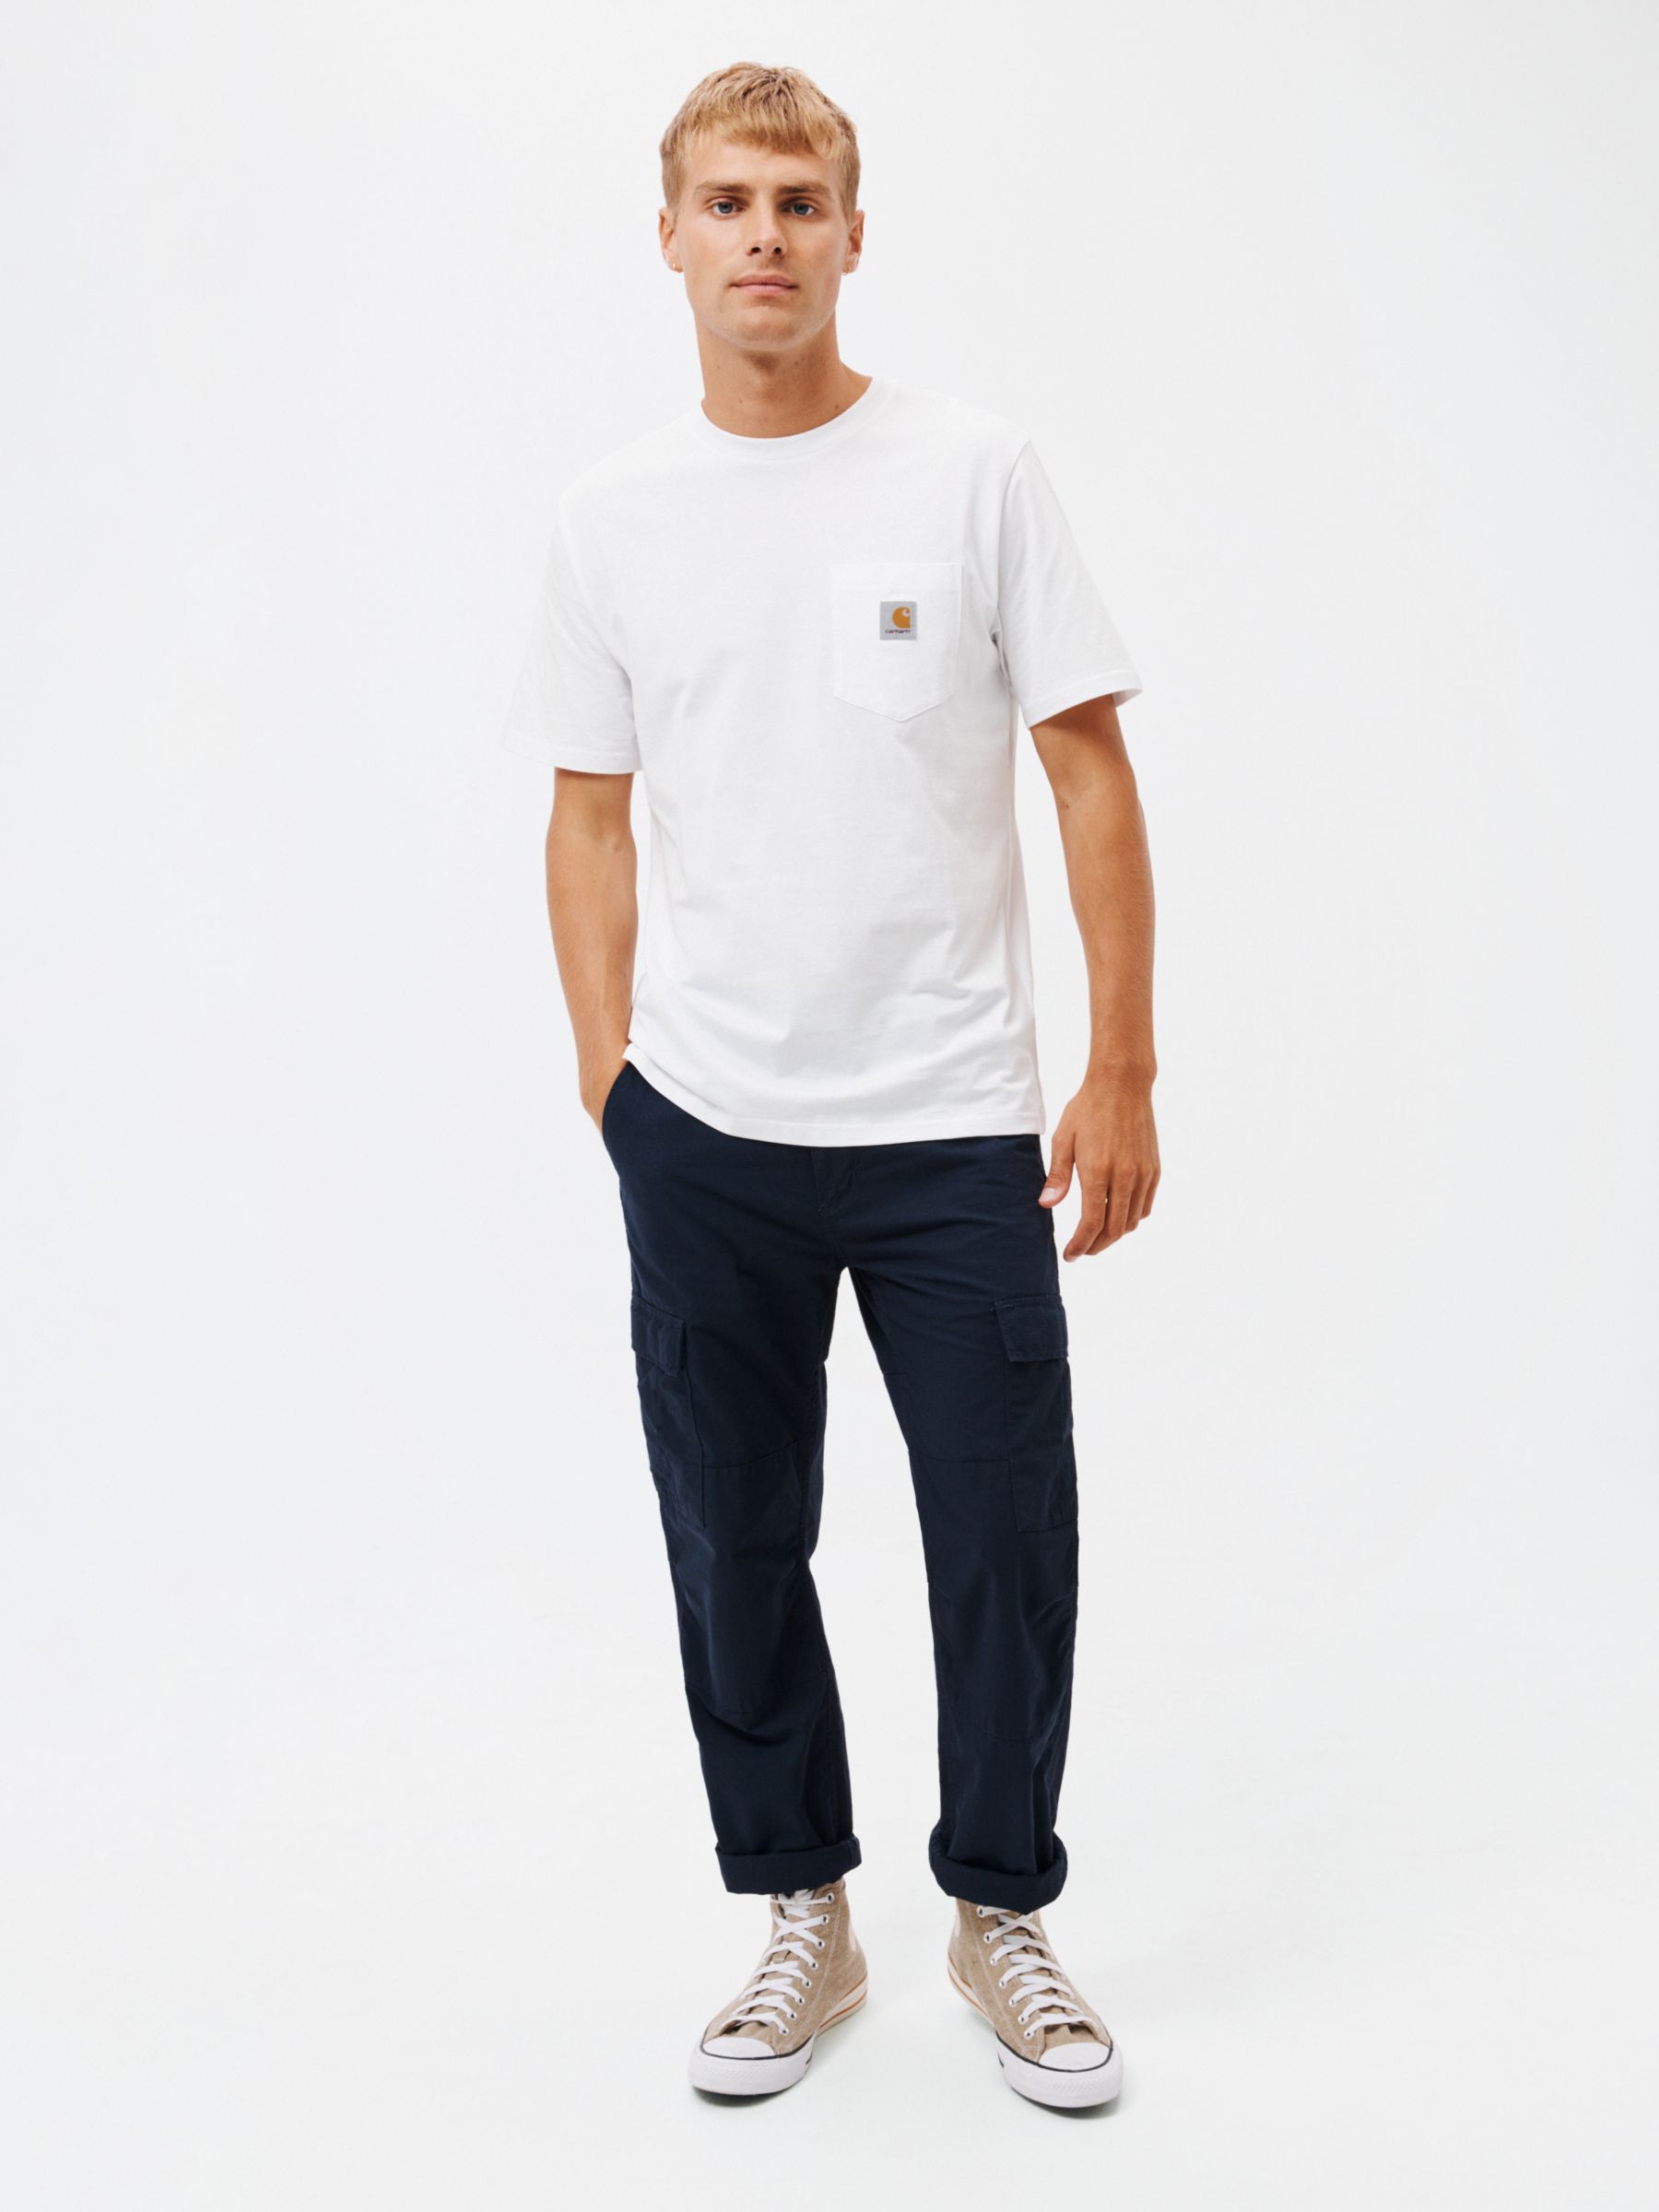 Carhartt WIP Short Sleeve Pocket T-Shirt, White, S